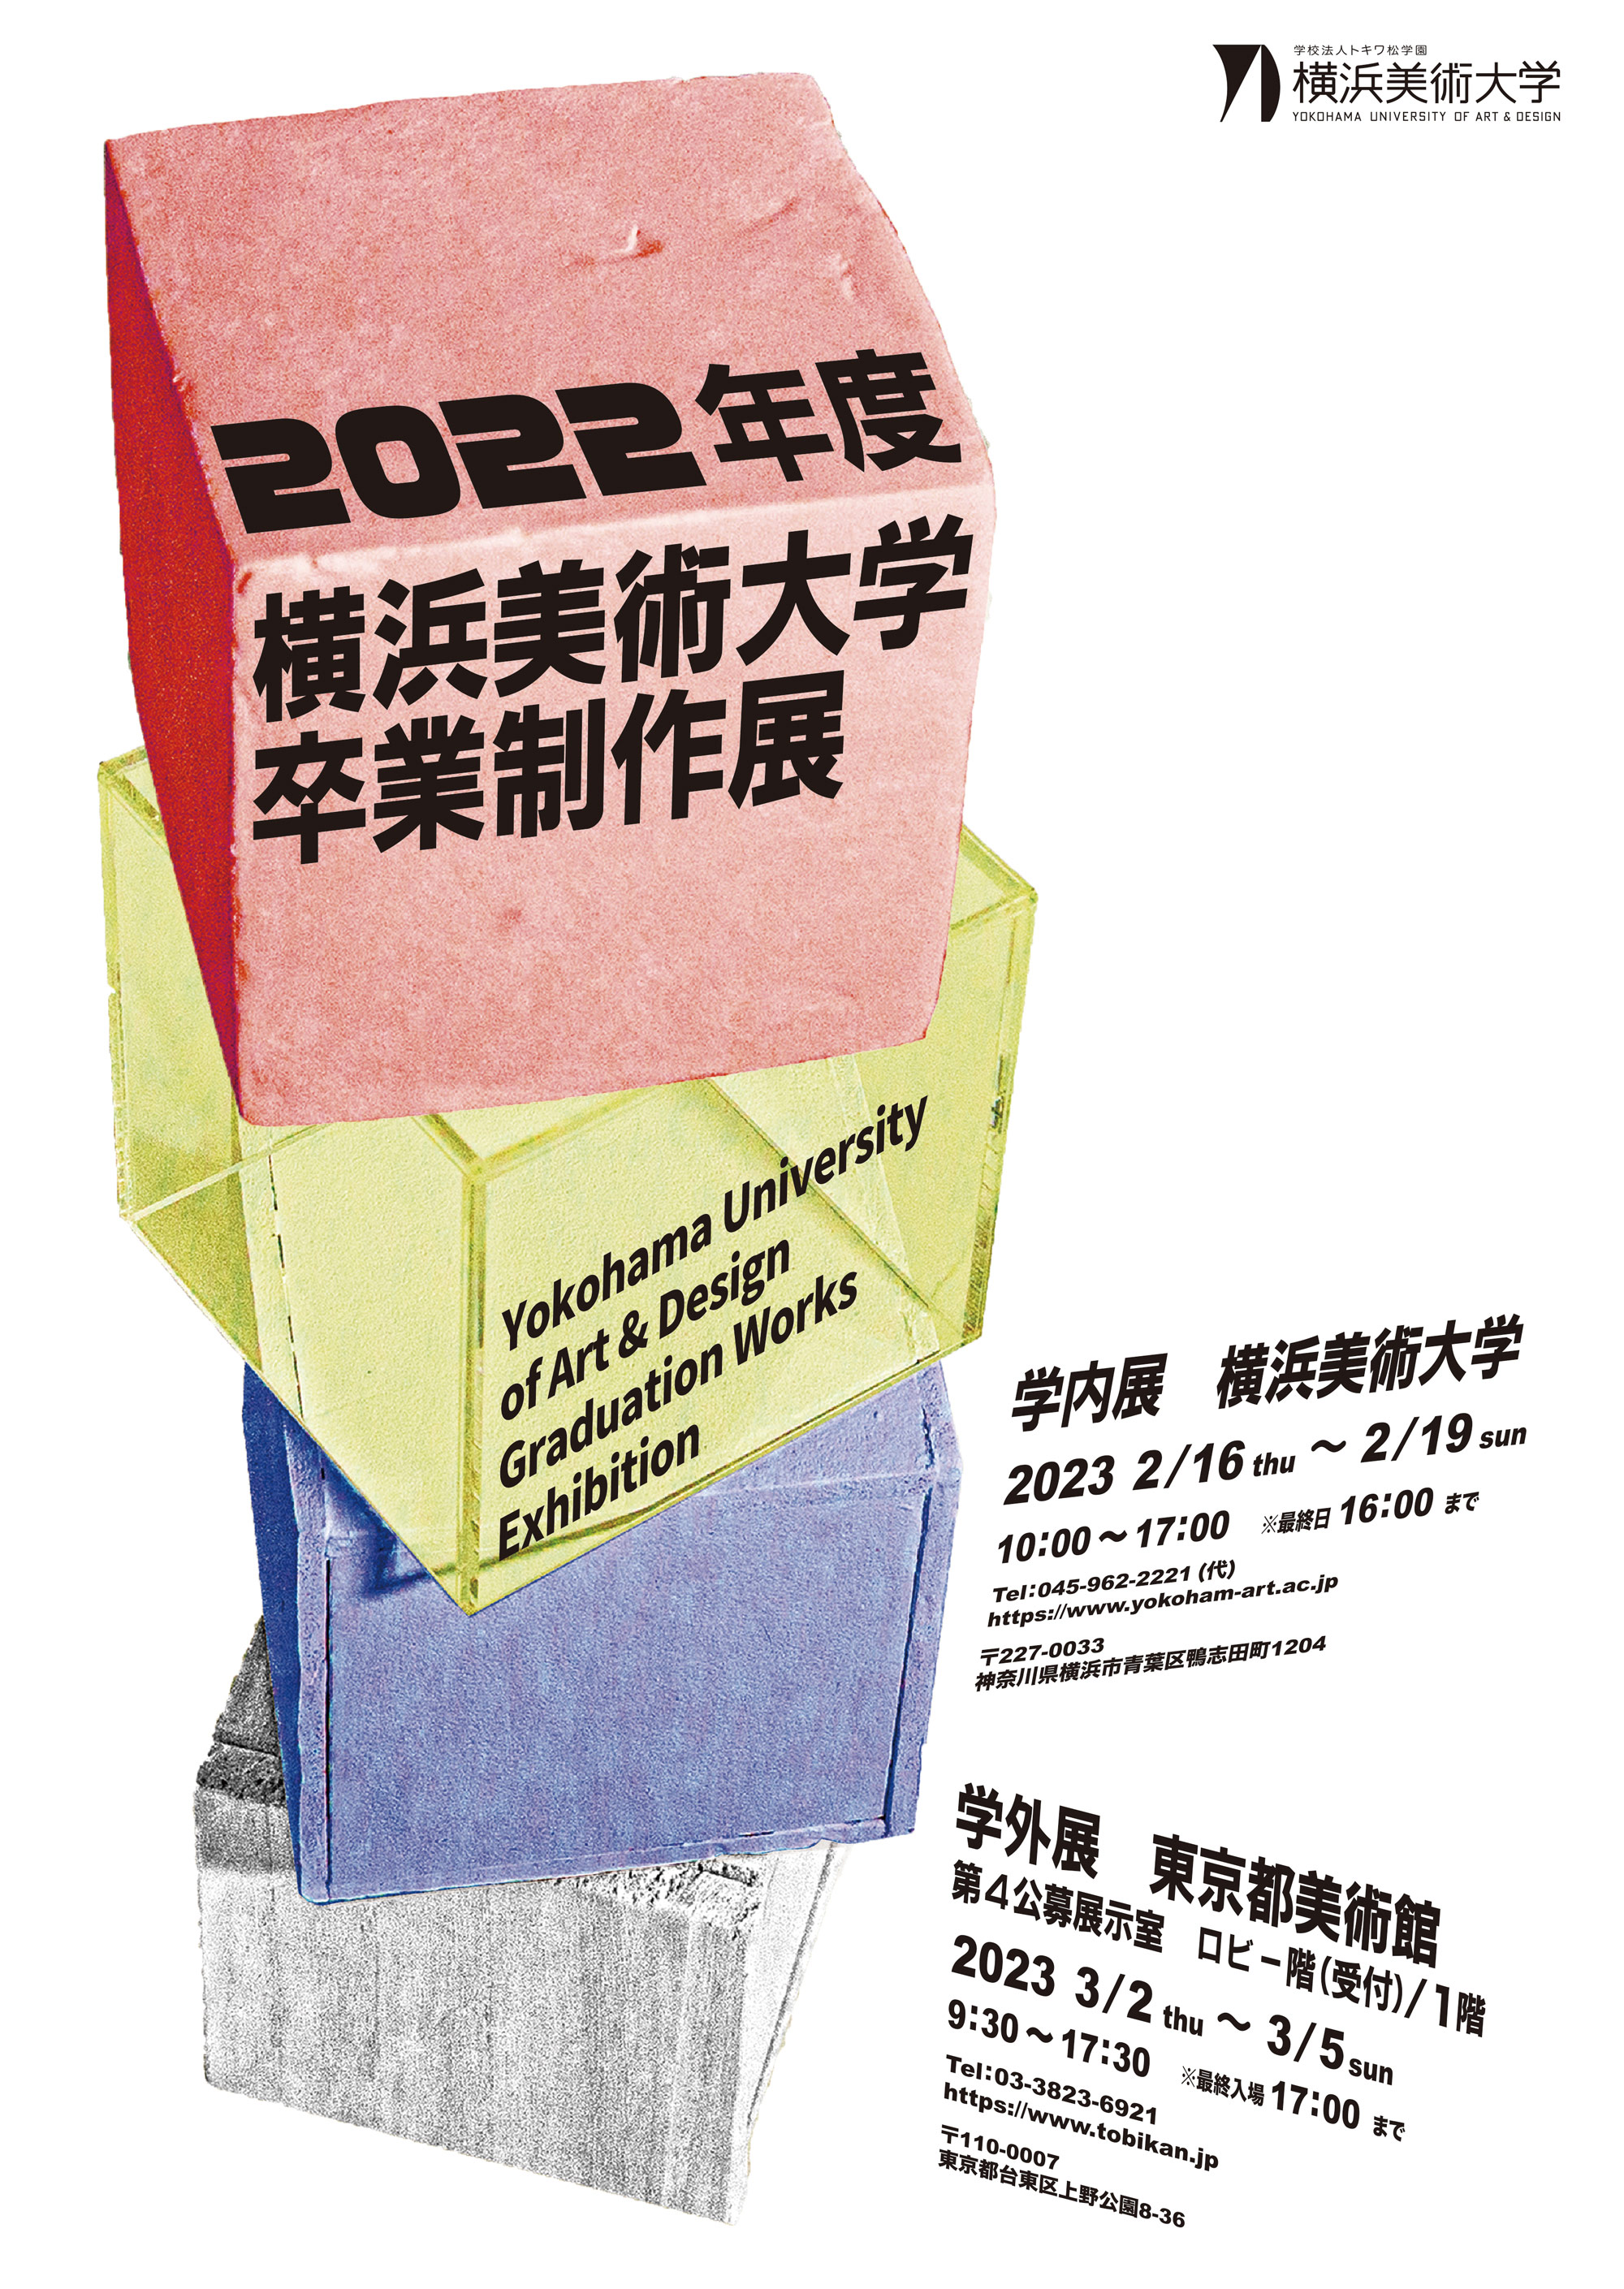 2022 Yokohama University of Art and Design Graduation Exhibition